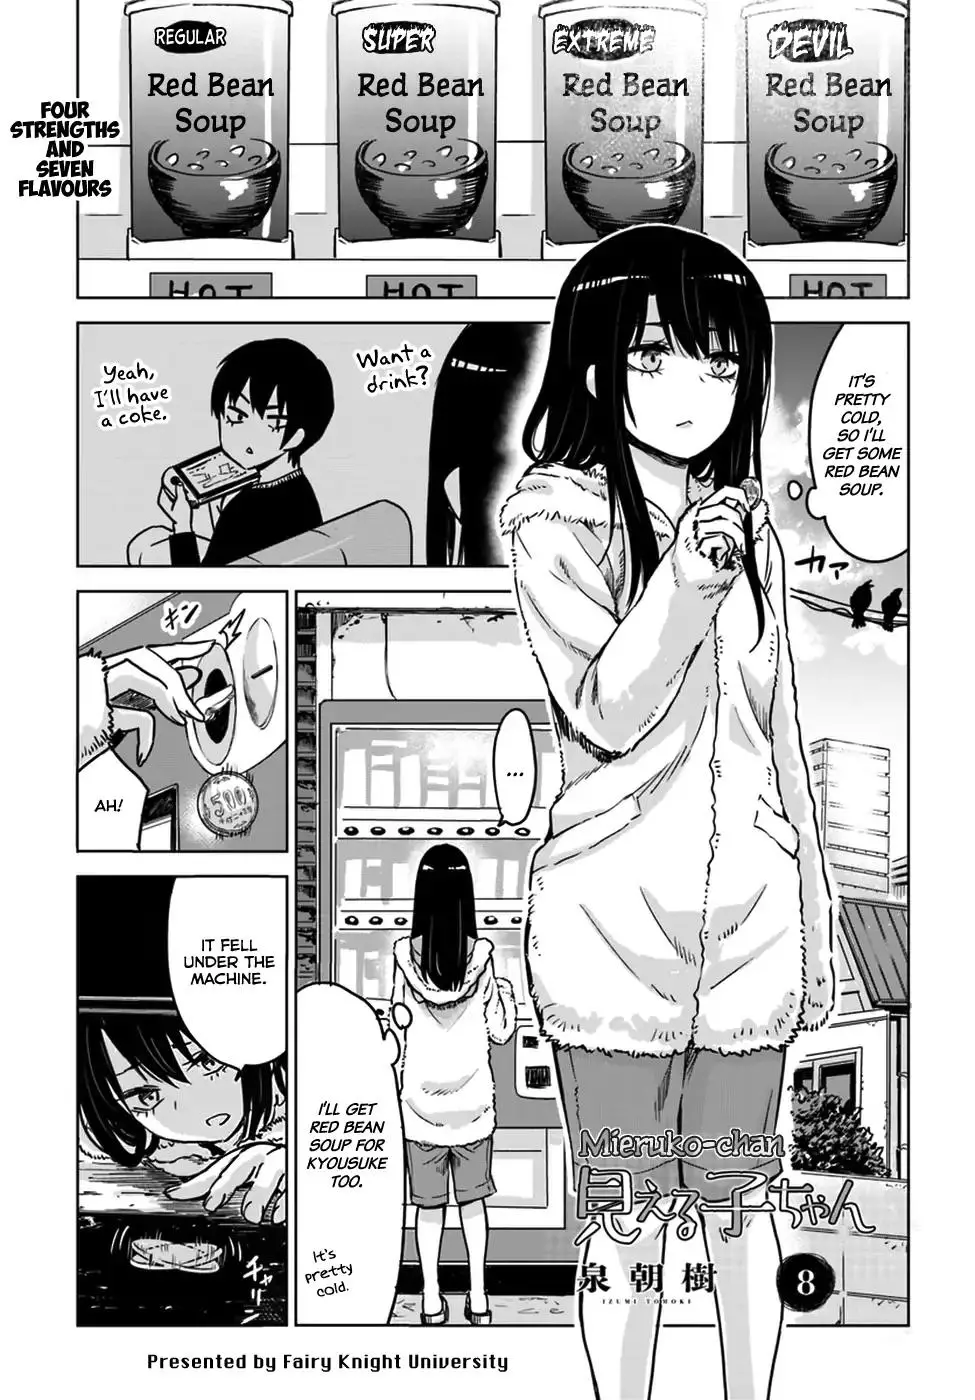 Mieruko-chan - 8 page 0